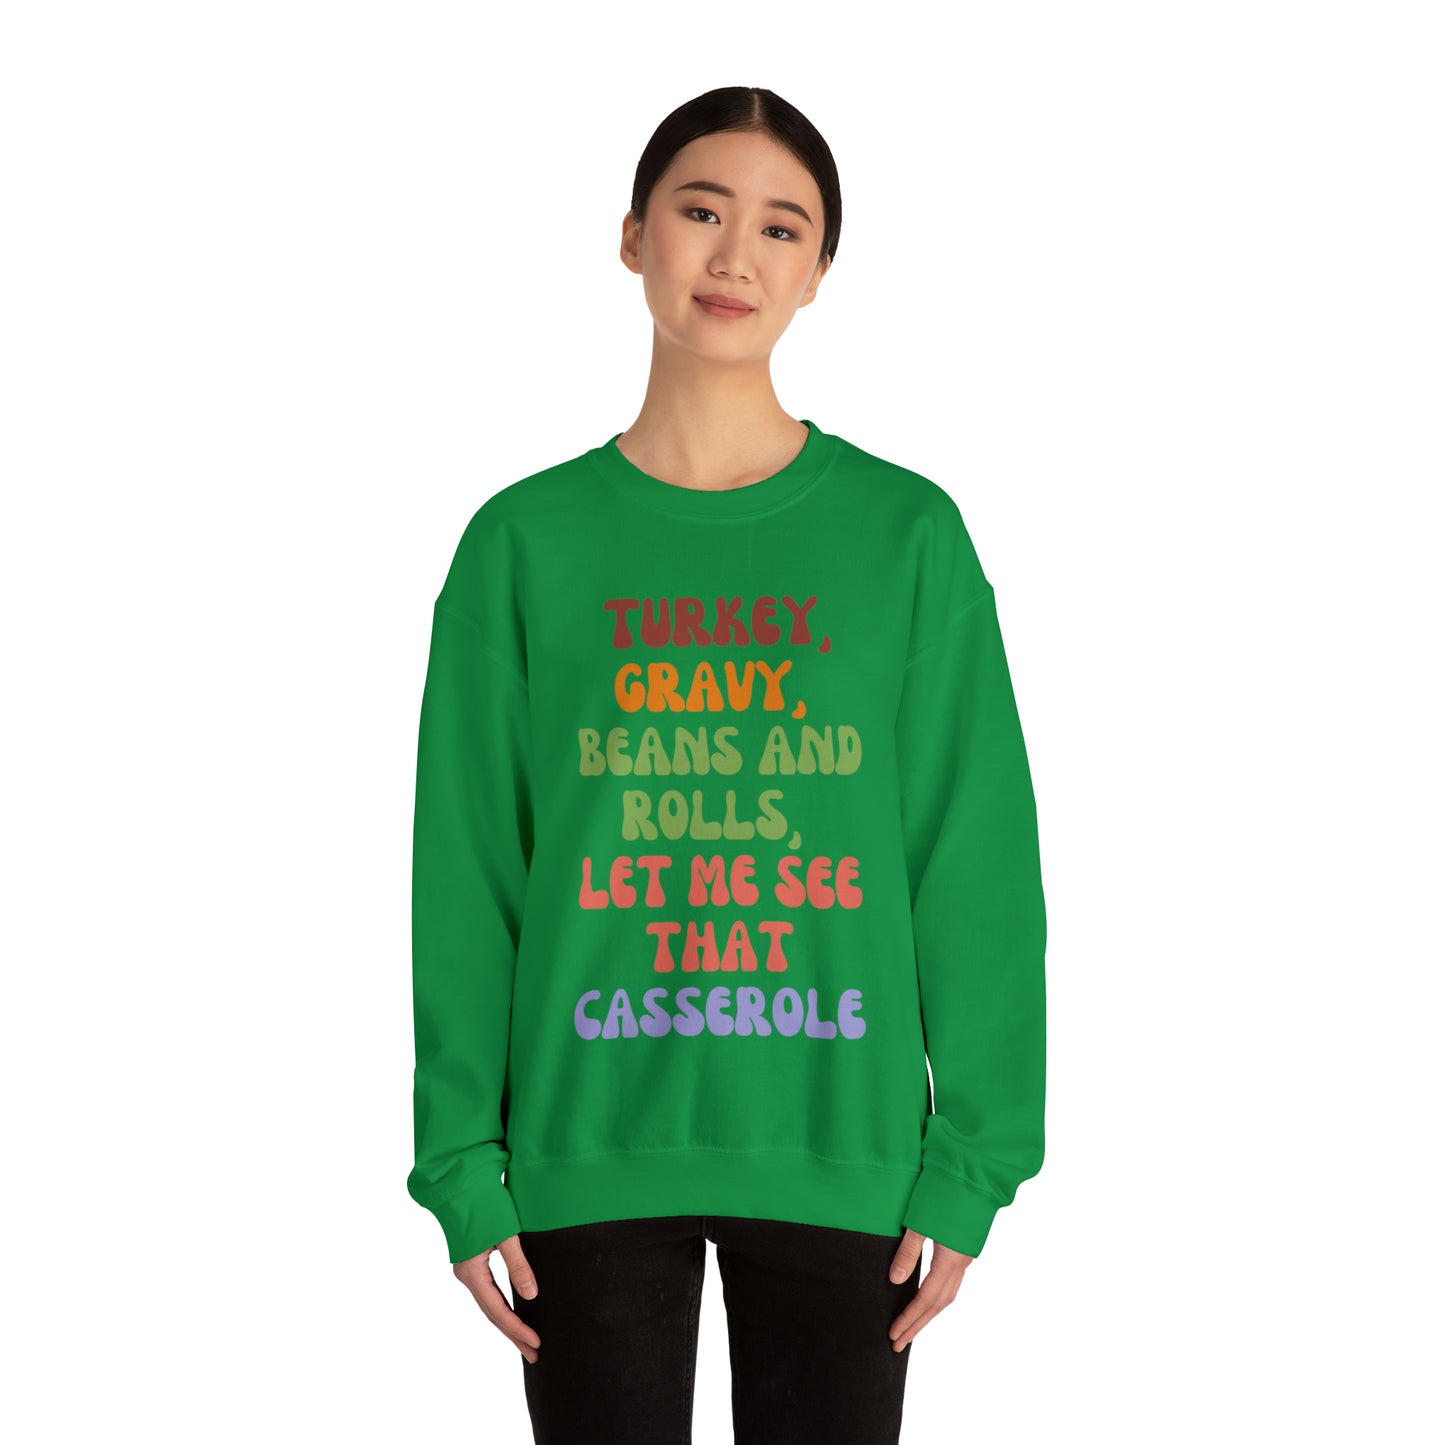 Turkey, Gravy, Beans and Rolls Let me see that Casserole Unisex Heavy Blend™ Crewneck Sweatshirt